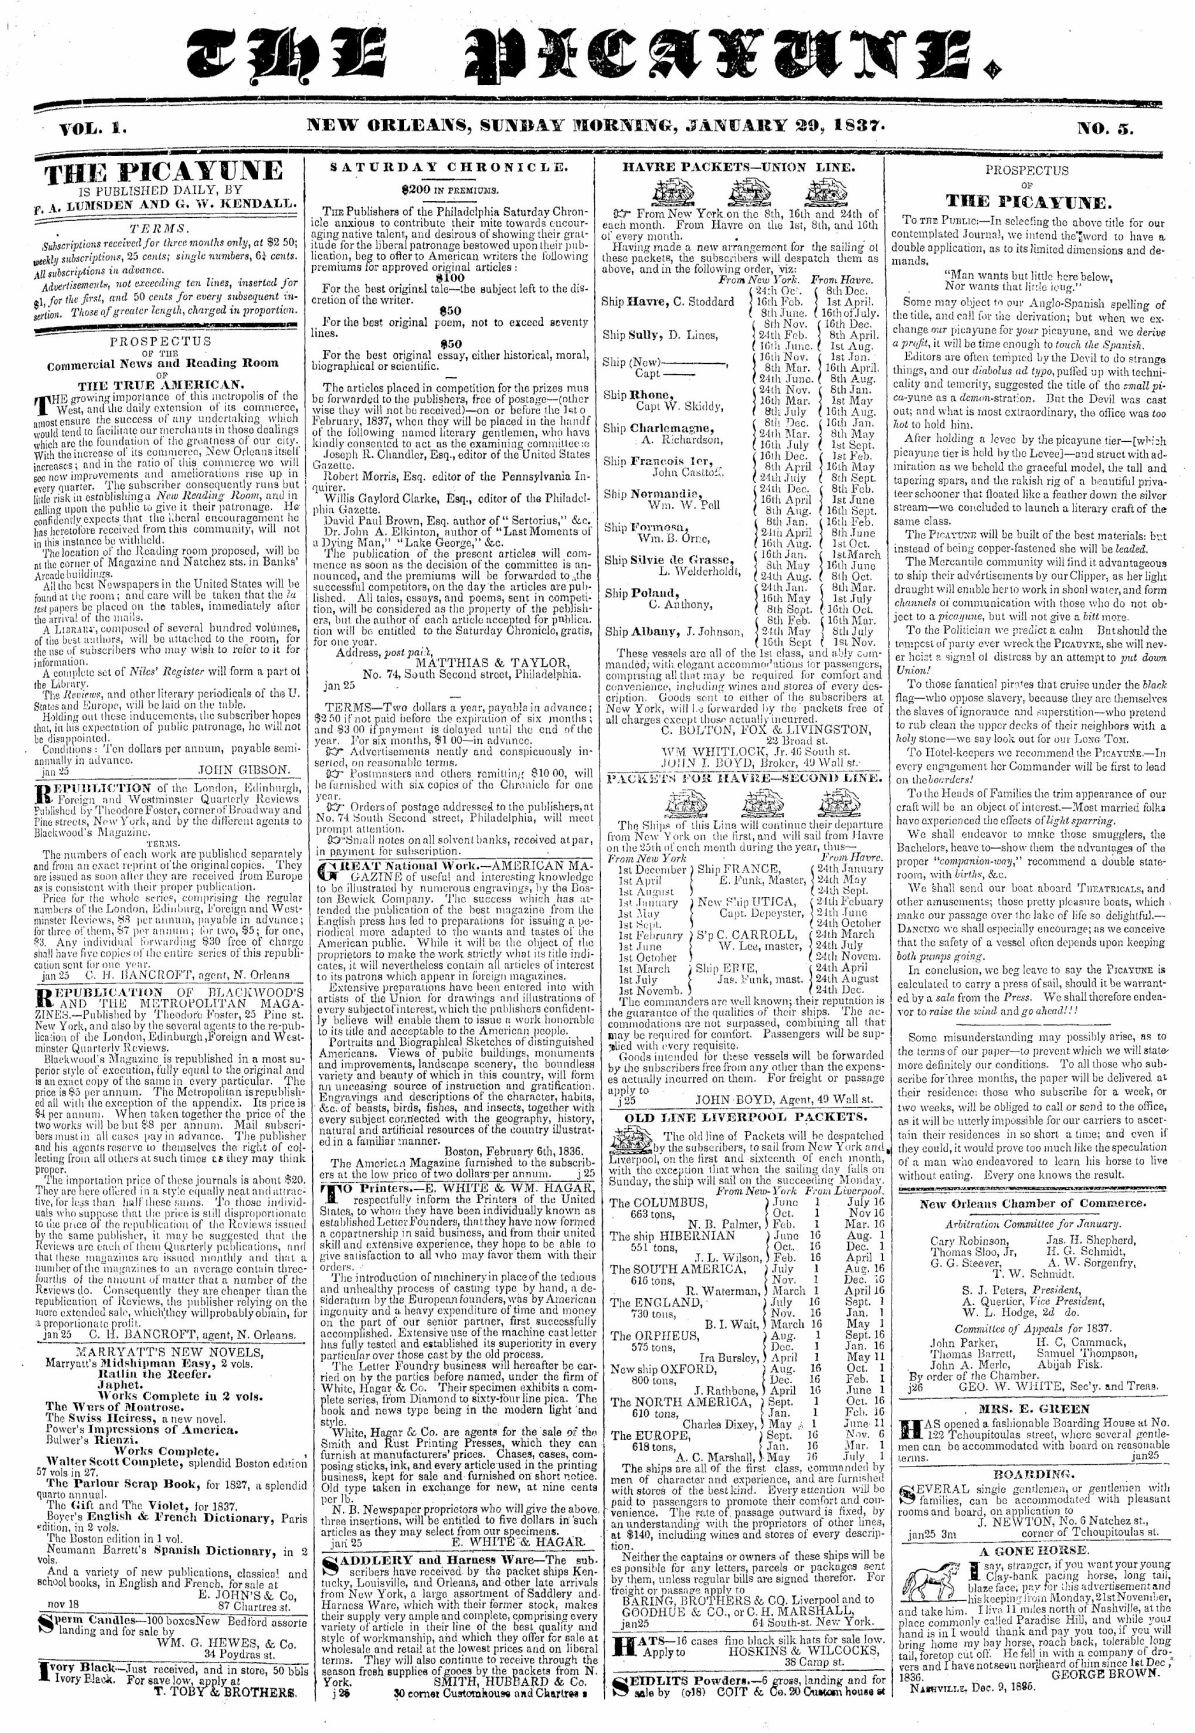 01 The Picayune newspaper 1837.pdf